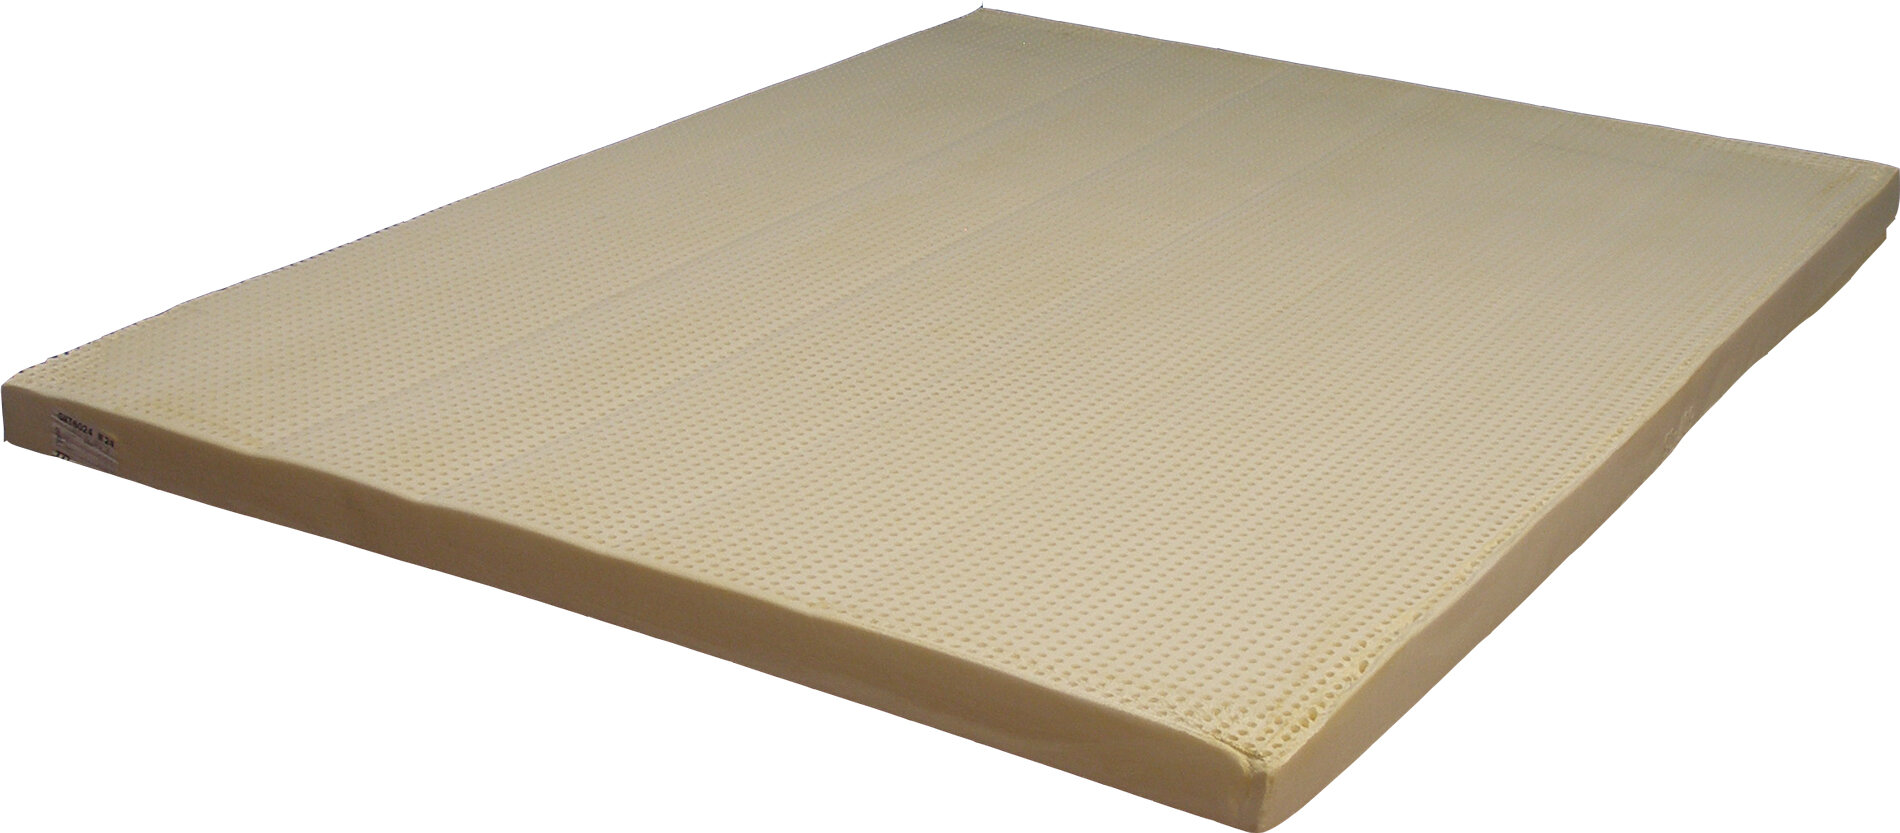 contura 9 1000 firm latex foam mattress bed